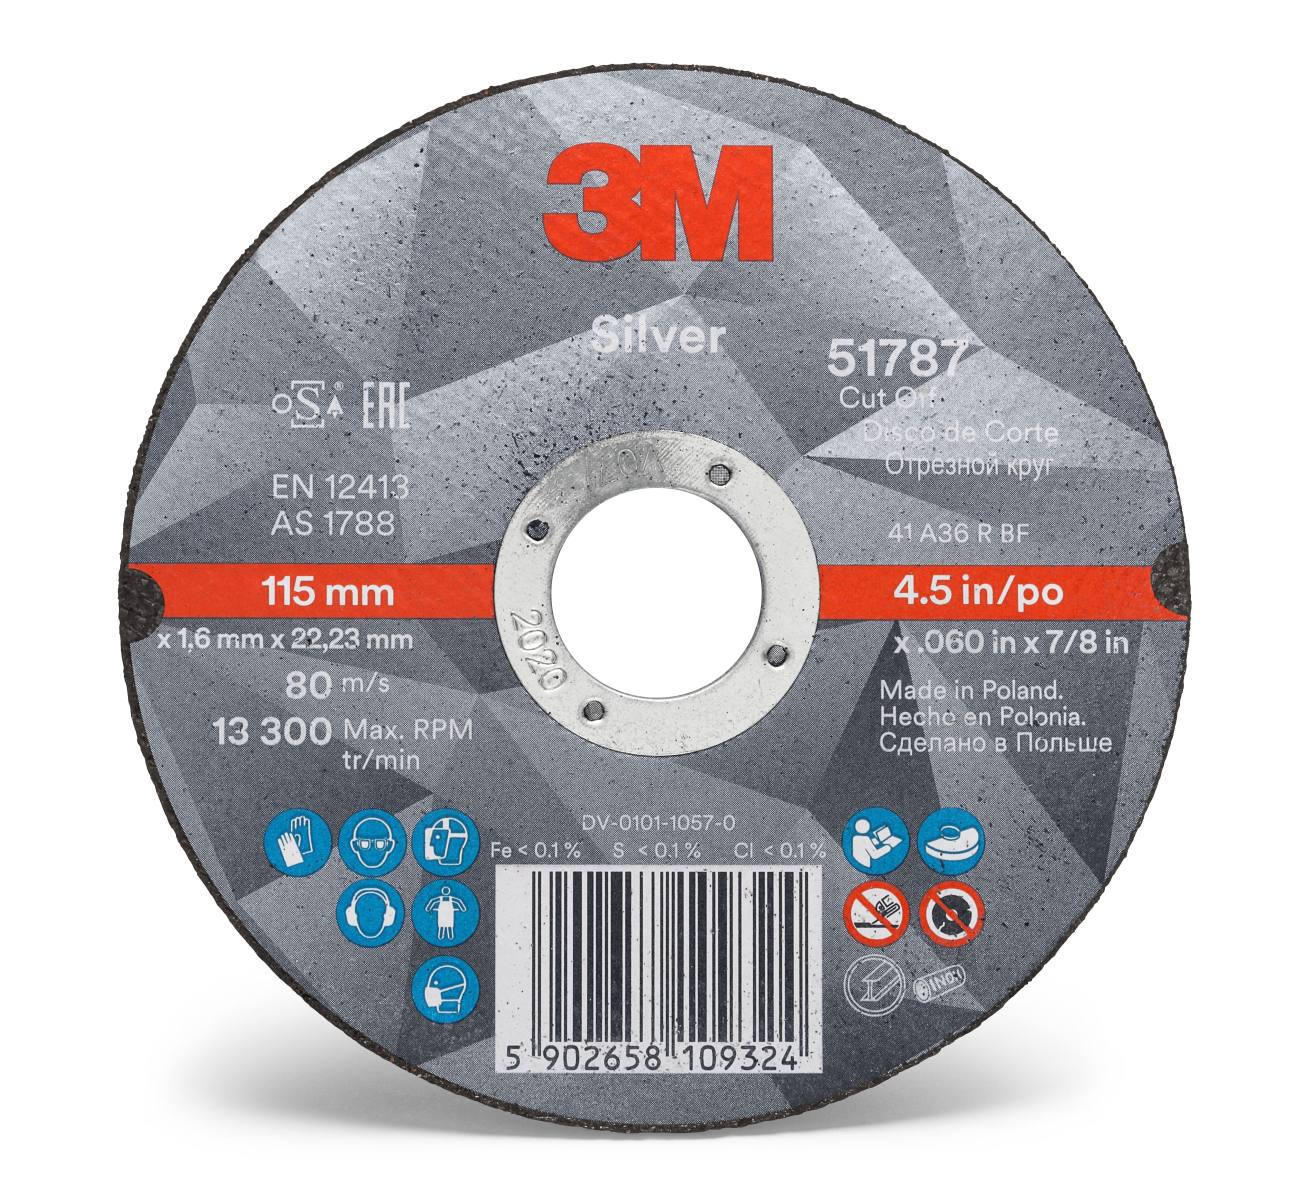 Disco de corte 3M Silver Cut-Off, 75 mm, 1,6 mm, 10 mm, T41, 51769